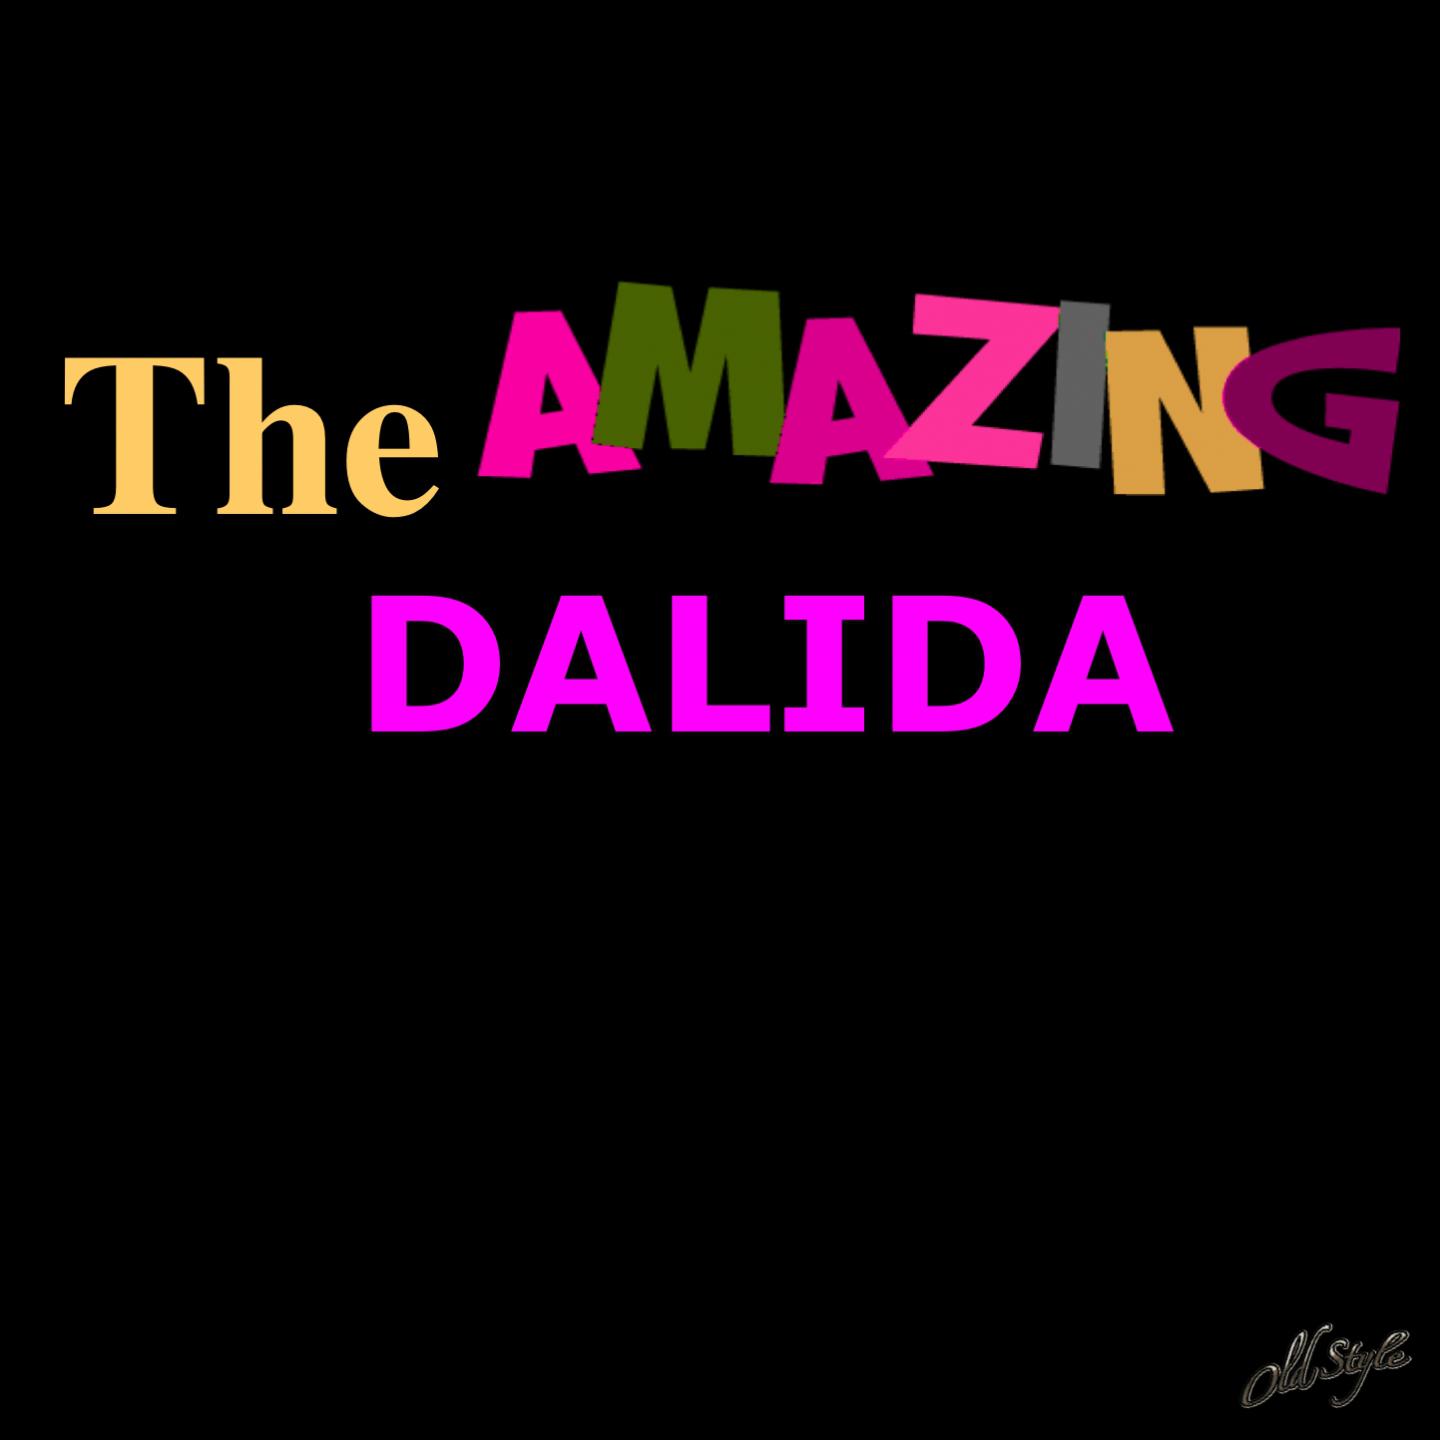 The amazing dalida专辑